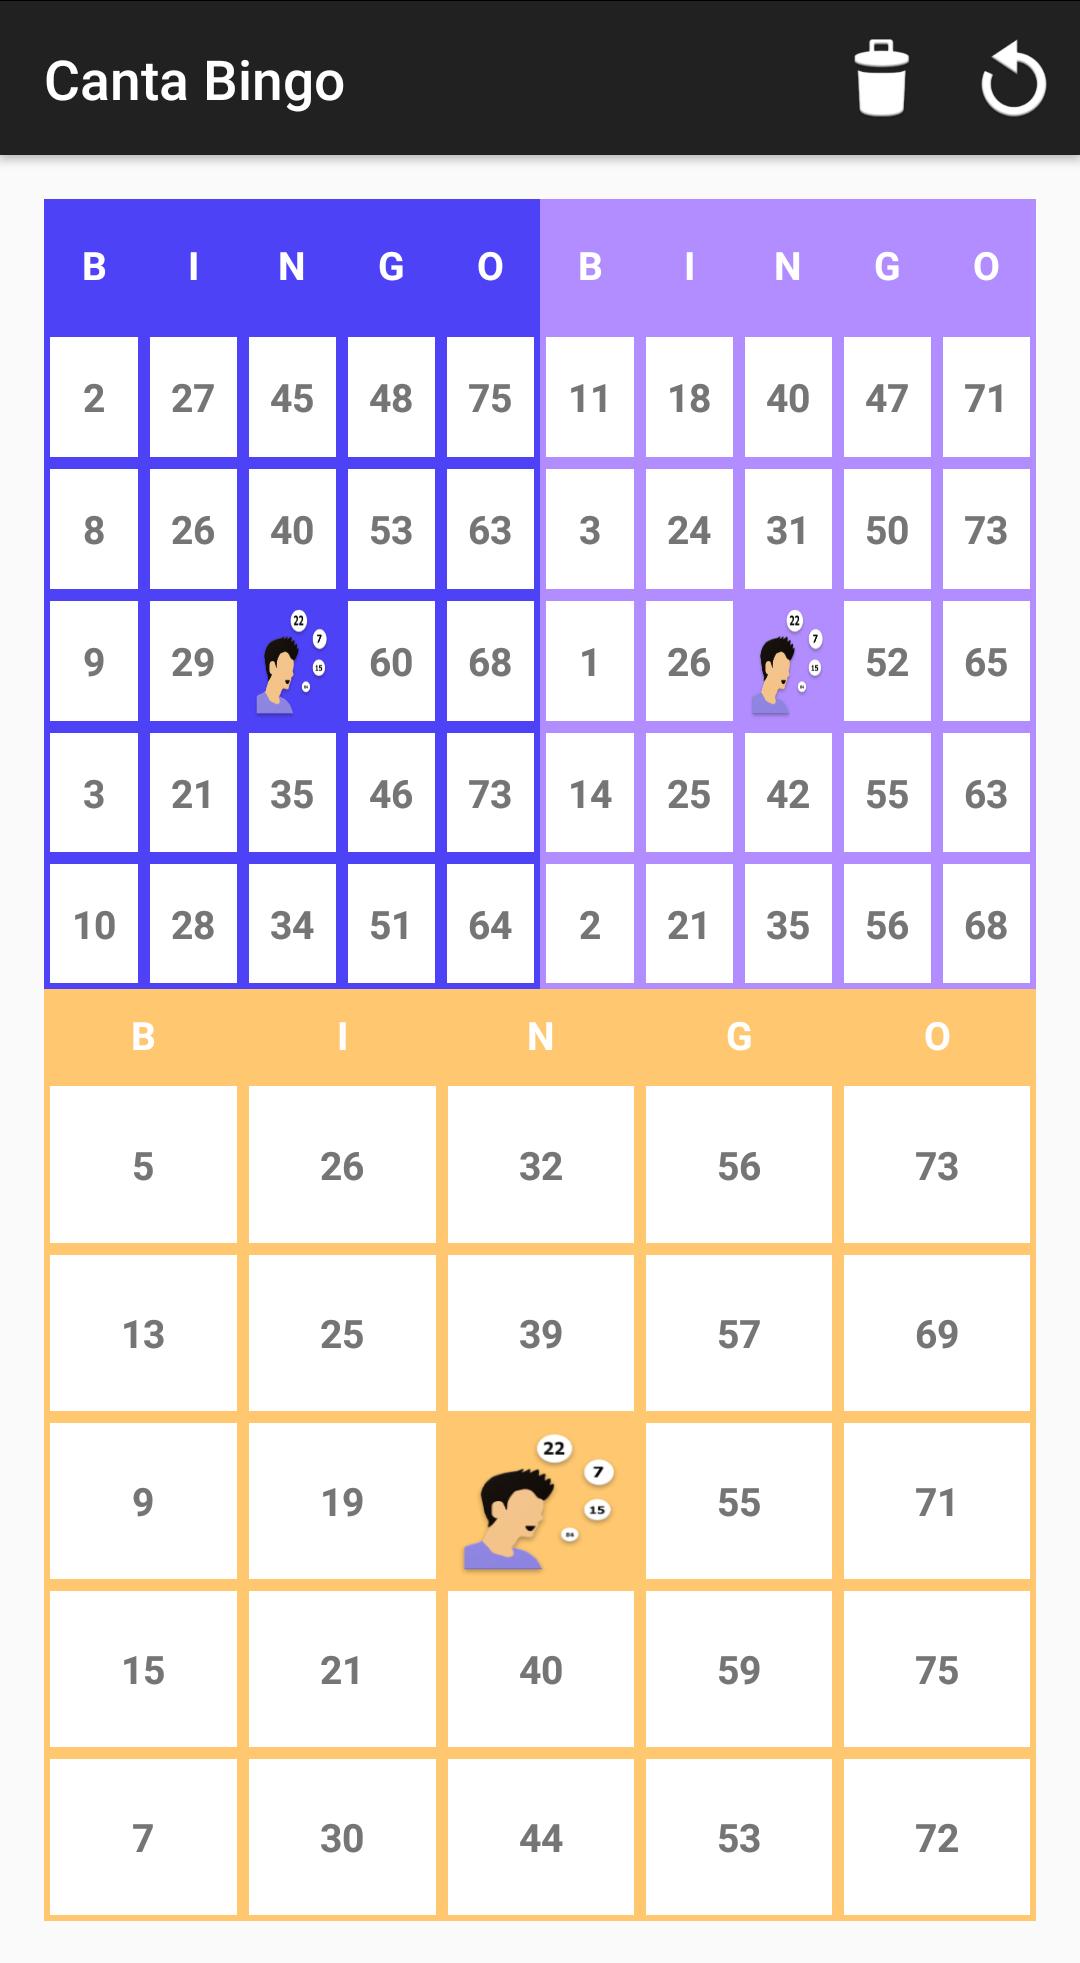 Bingo Shout - Bingo Caller Free for Android - APK Download